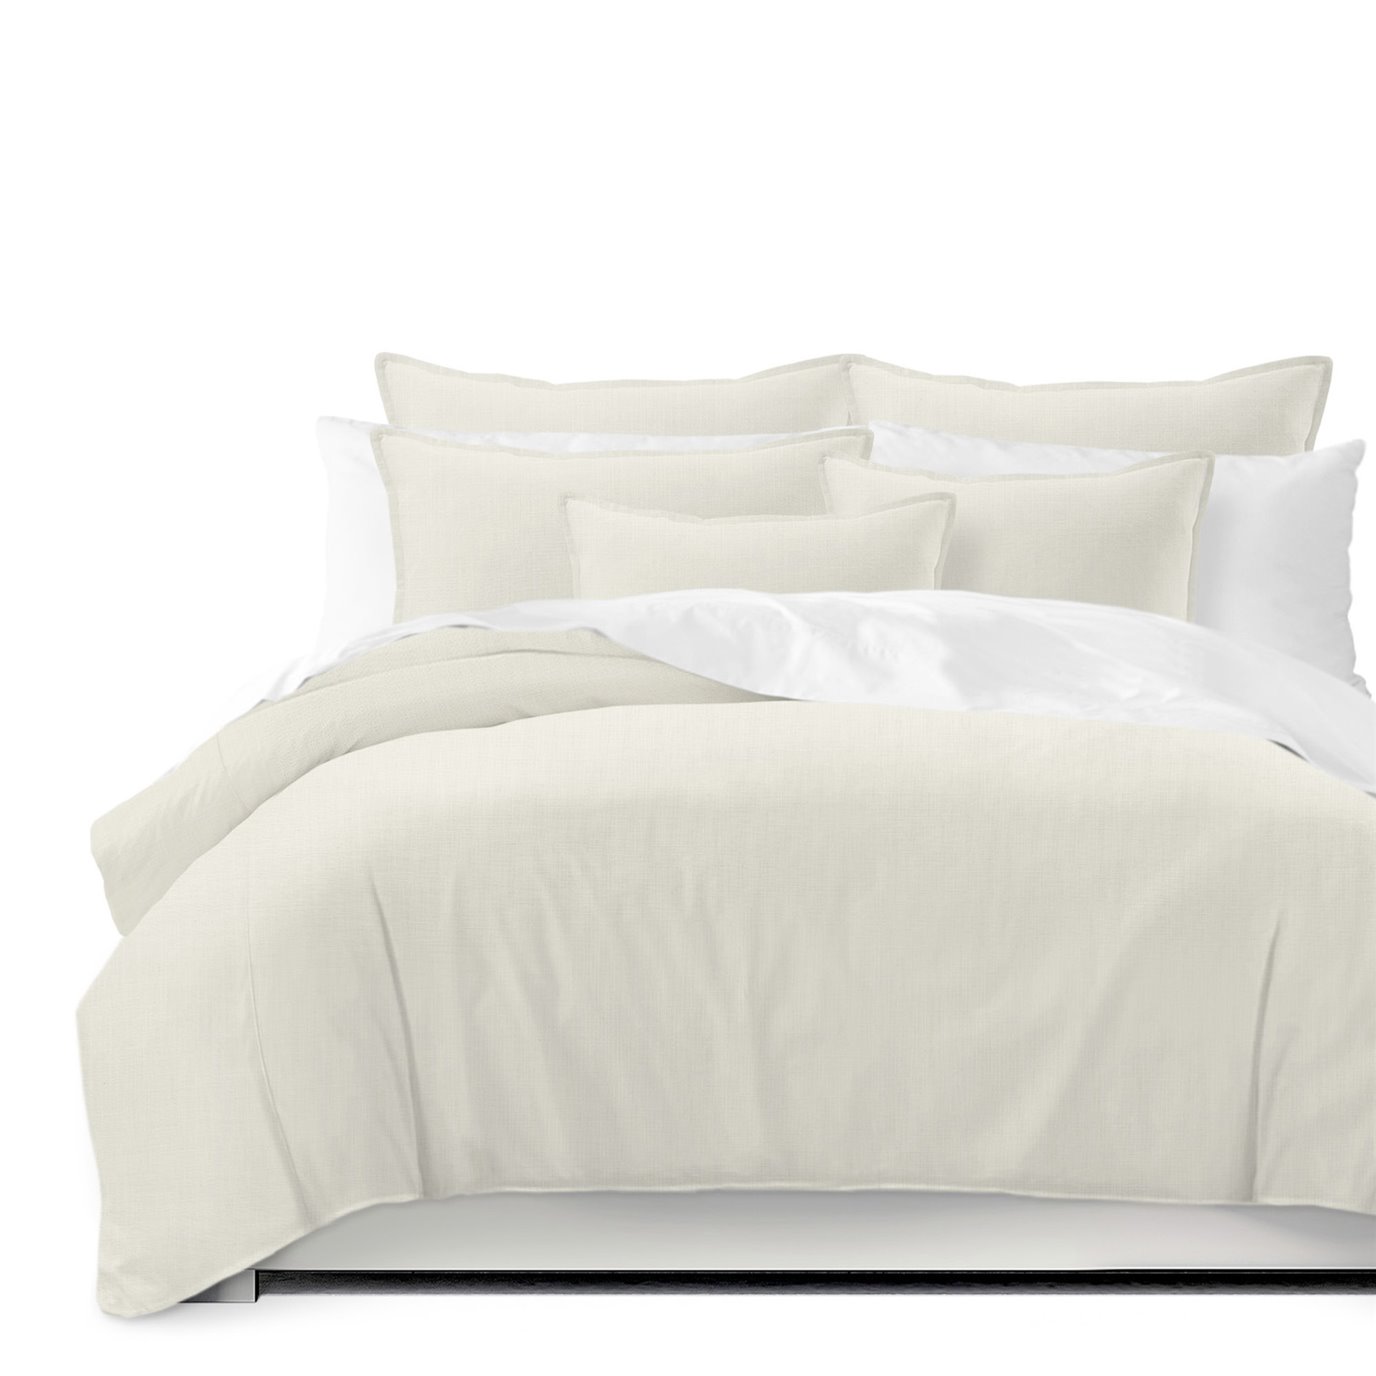 Ancebridge Vanilla Comforter and Pillow Sham(s) Set - Size Queen